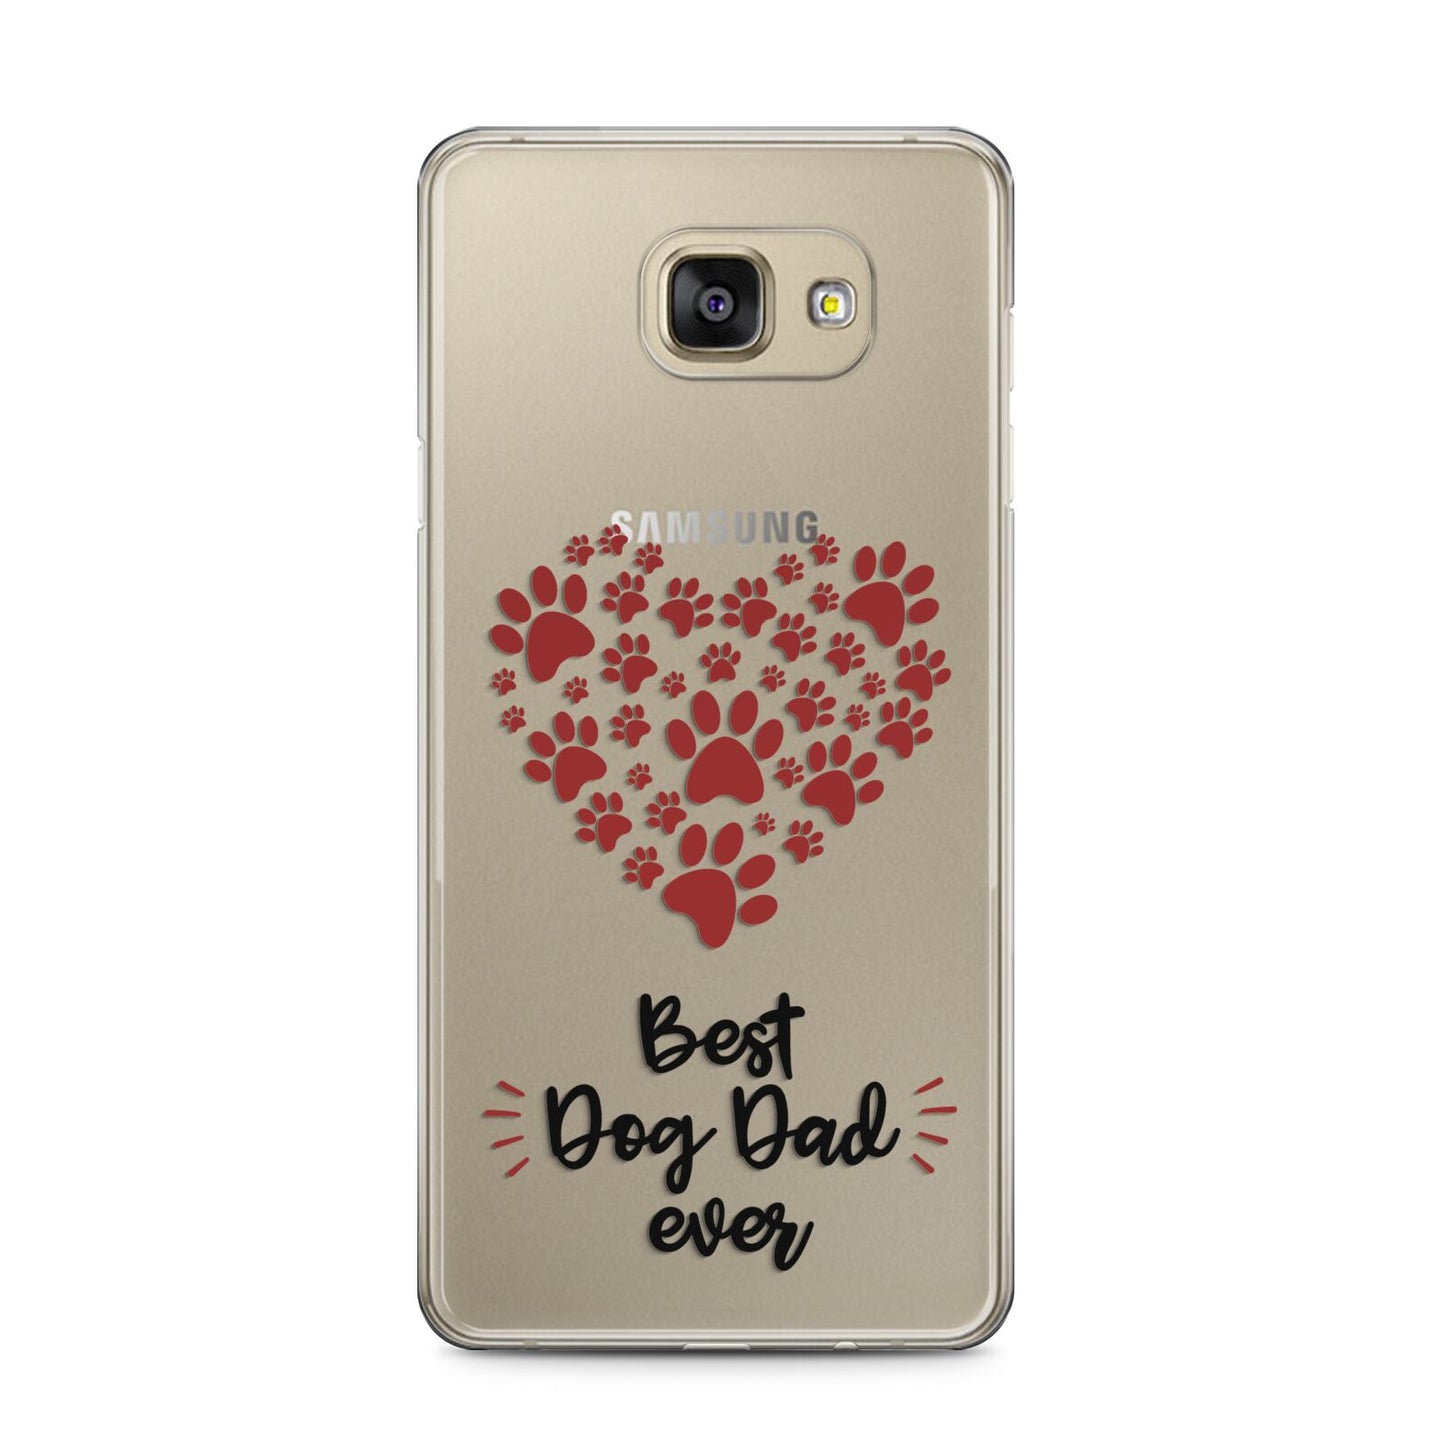 Best Dog Dad Paws Samsung Galaxy A5 2016 Case on gold phone